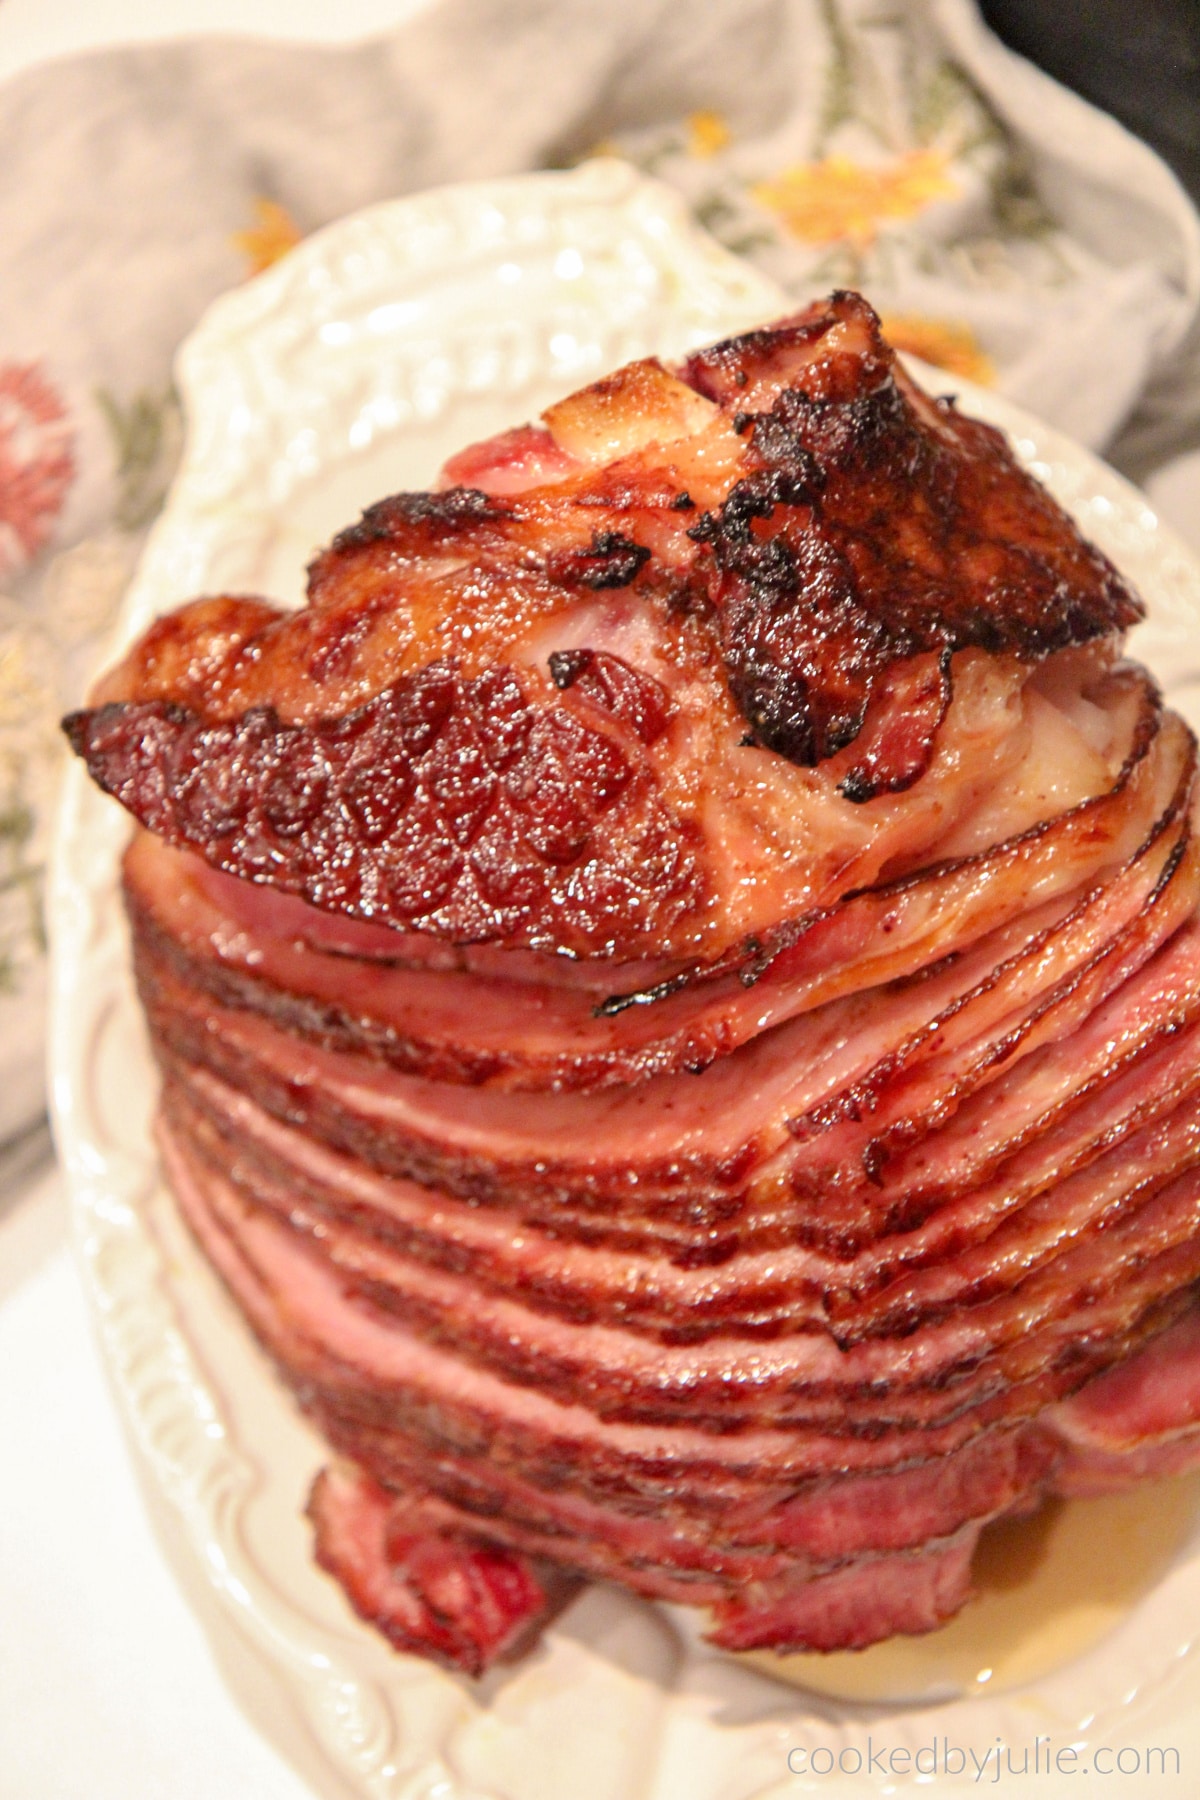 Baked Ham With Brown Sugar Glaze Recipe